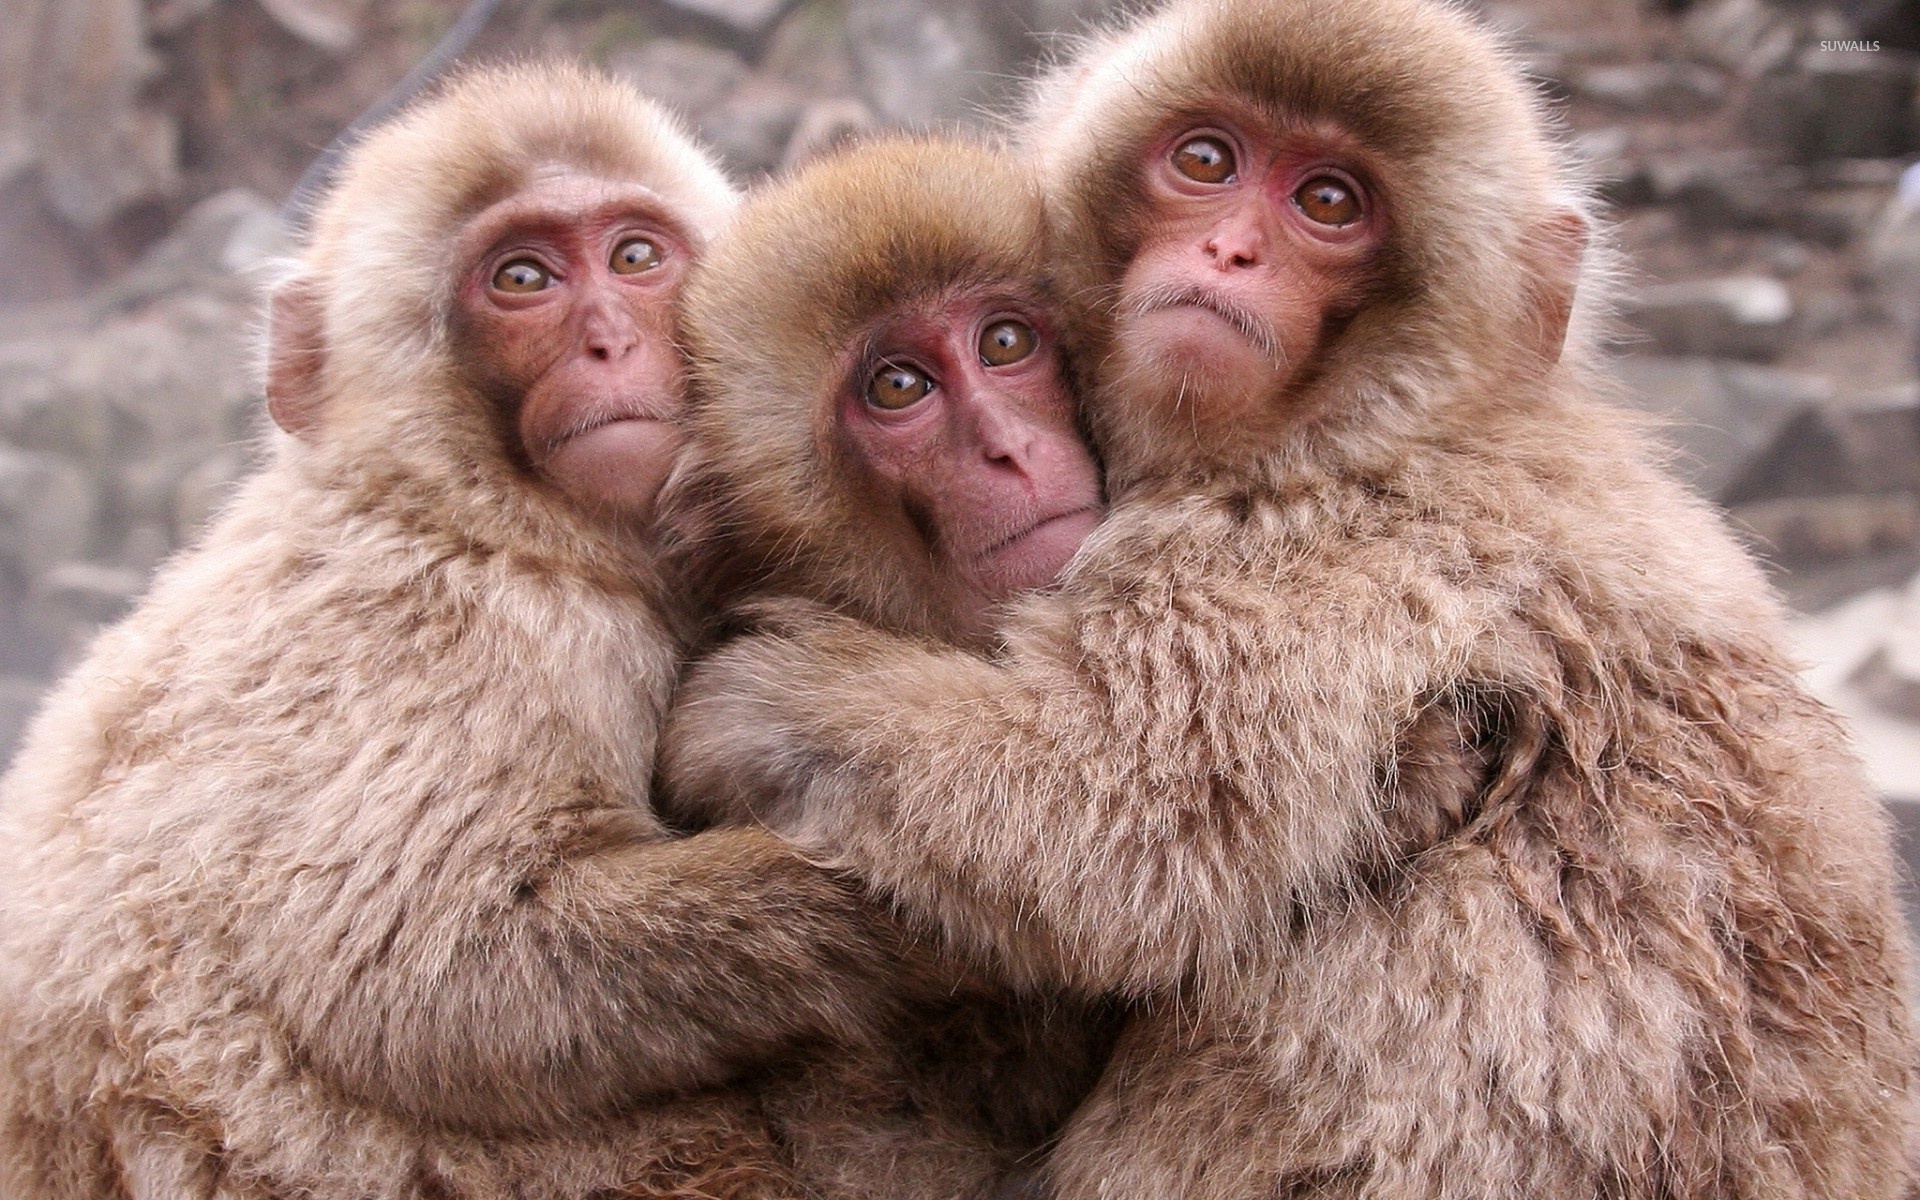 Cute monkeys hugging wallpaper - Animal